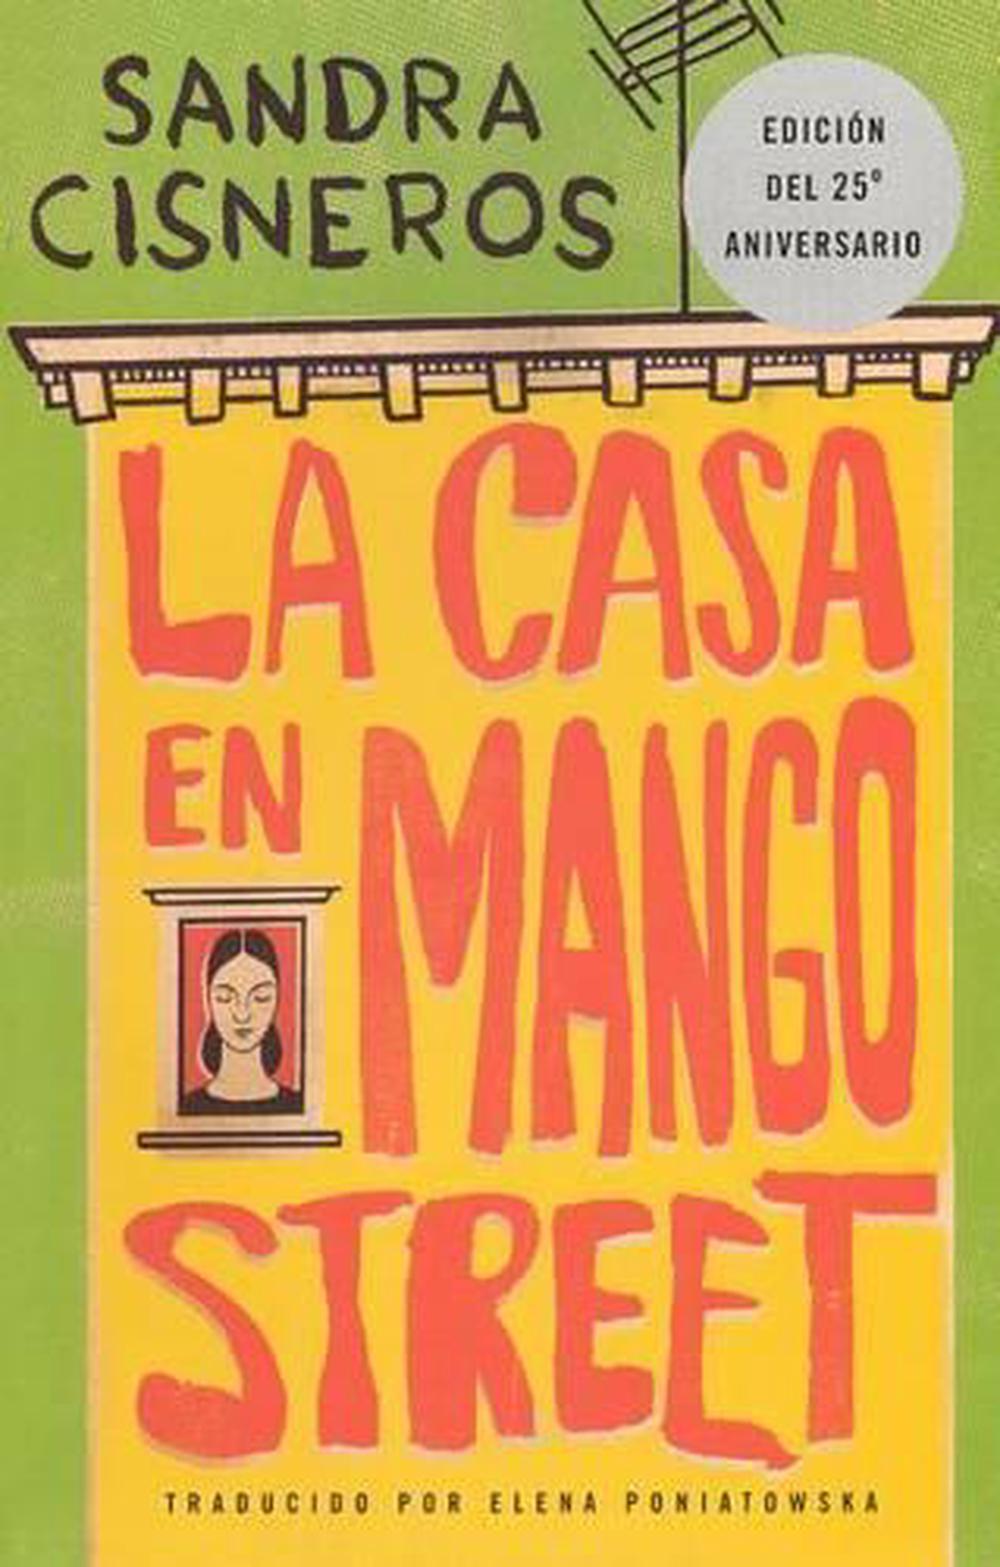 The House on Mango Street by Sandra Cisneros